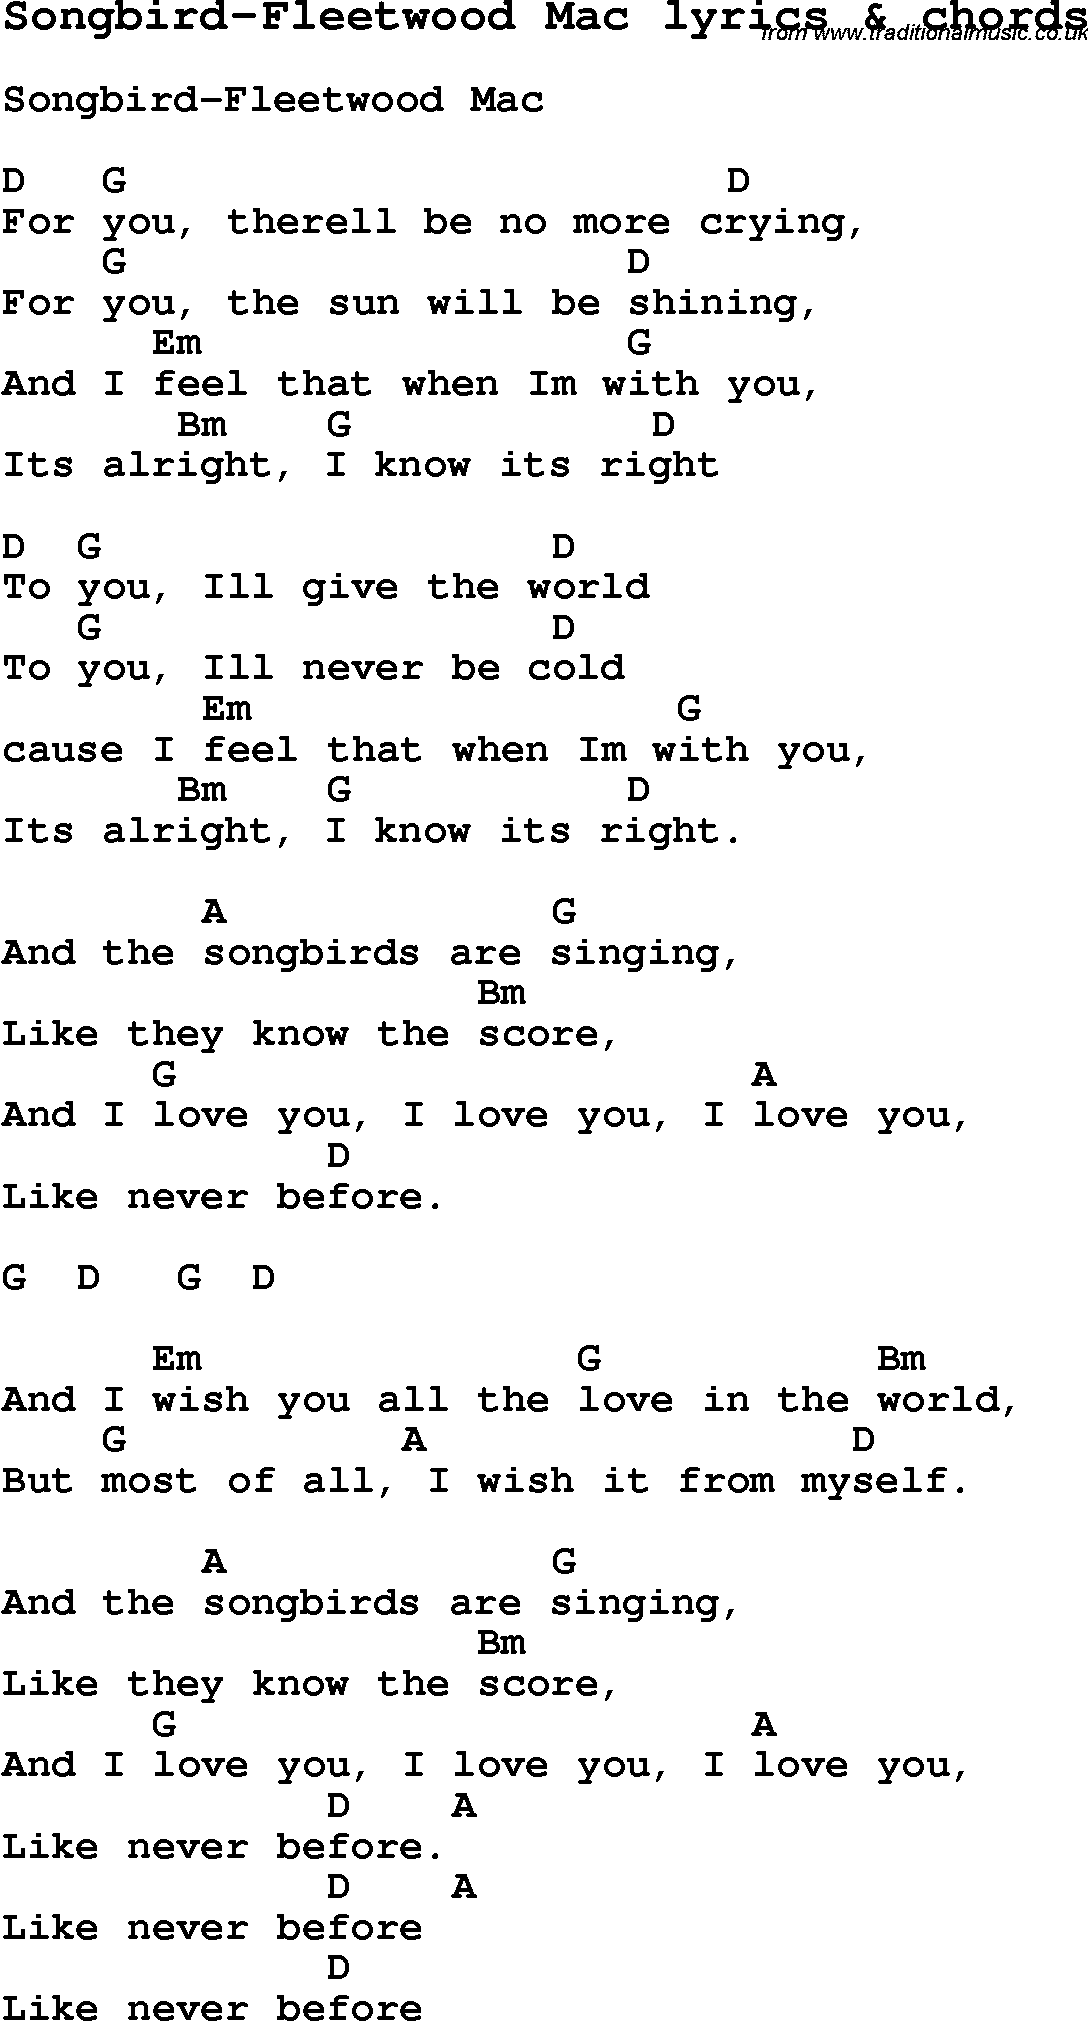 Love Song Lyrics for:bird-Fleetwood Mac with chords for Ukulele, Guitar Banjo etc.